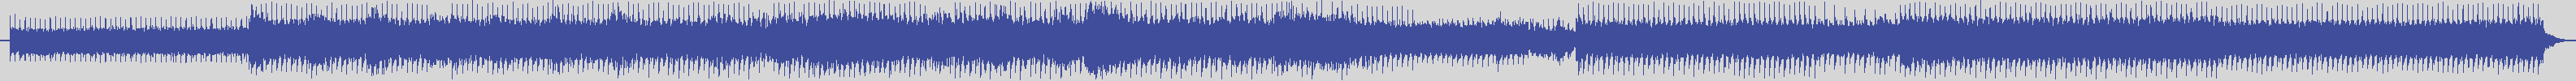 upr [UPR010] Radical G - Ghost Rider [Rework] audio wave form